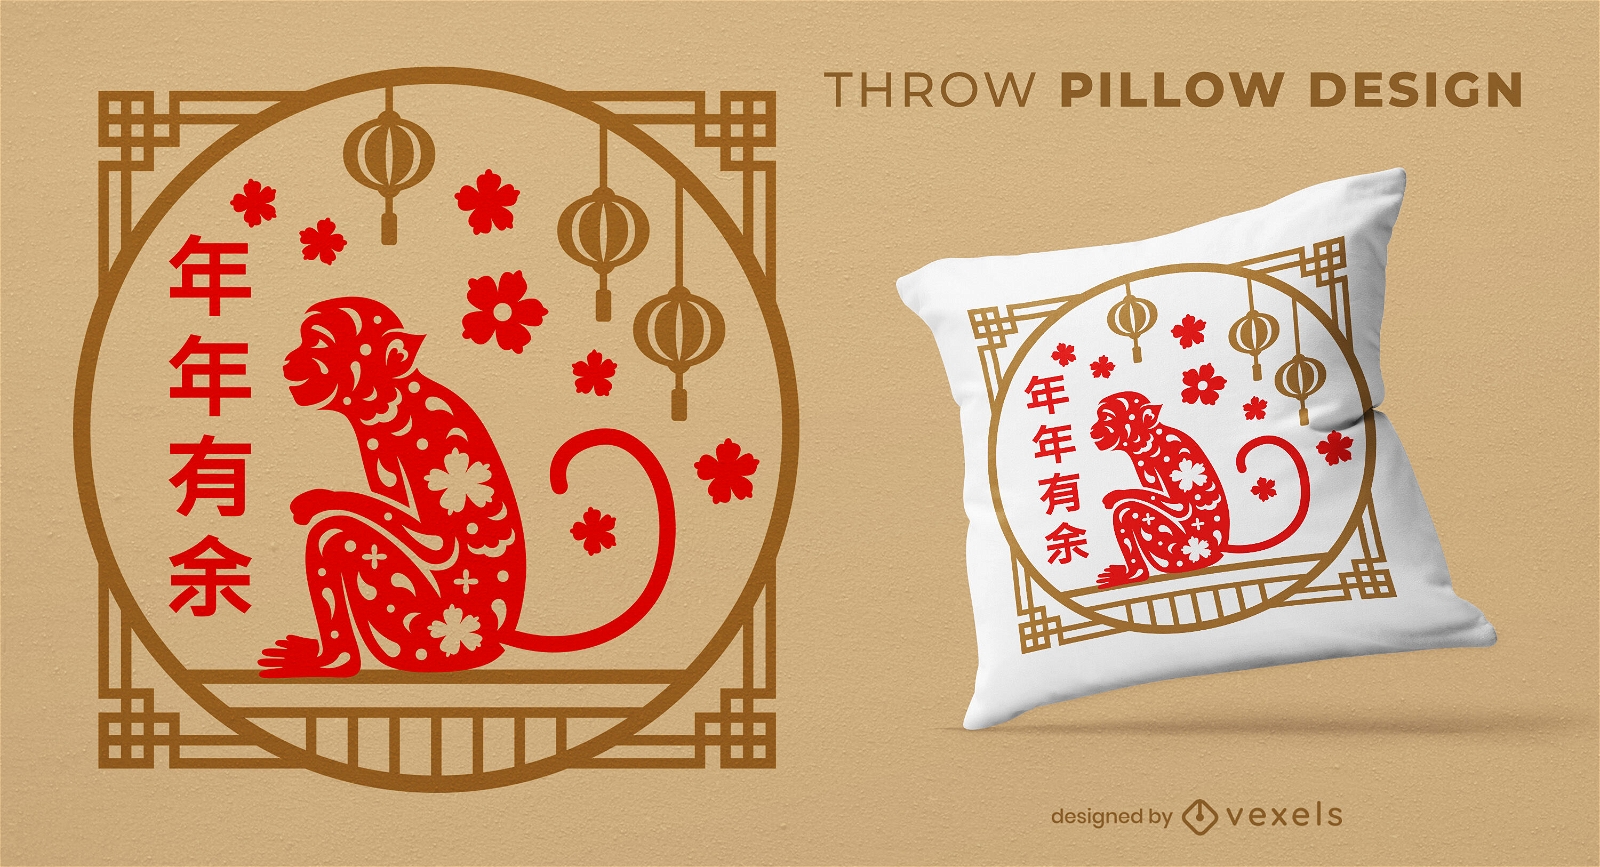 Lunar Year of the Monkey throw pillow design